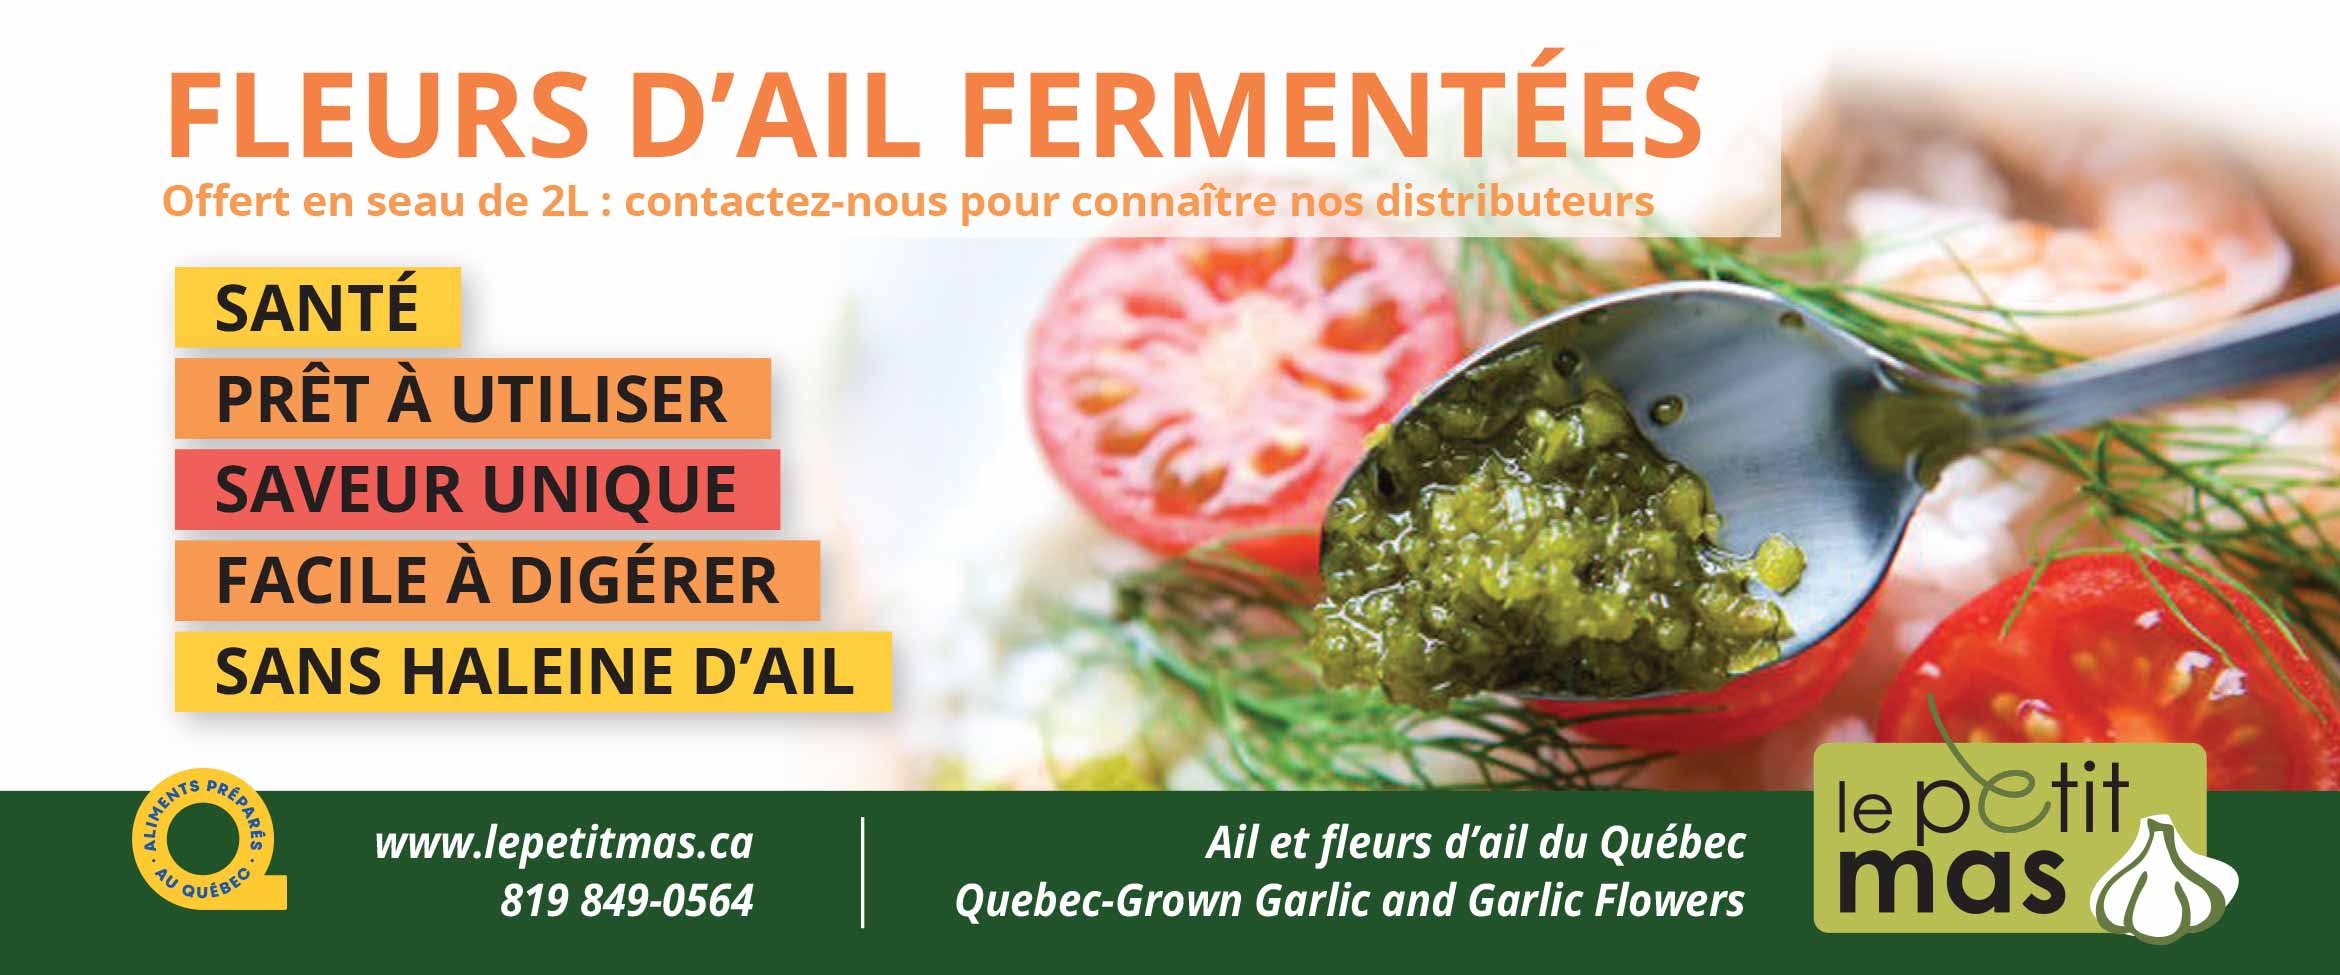 fleurs-d'ail-fermentees-78x325_2019-1_FR